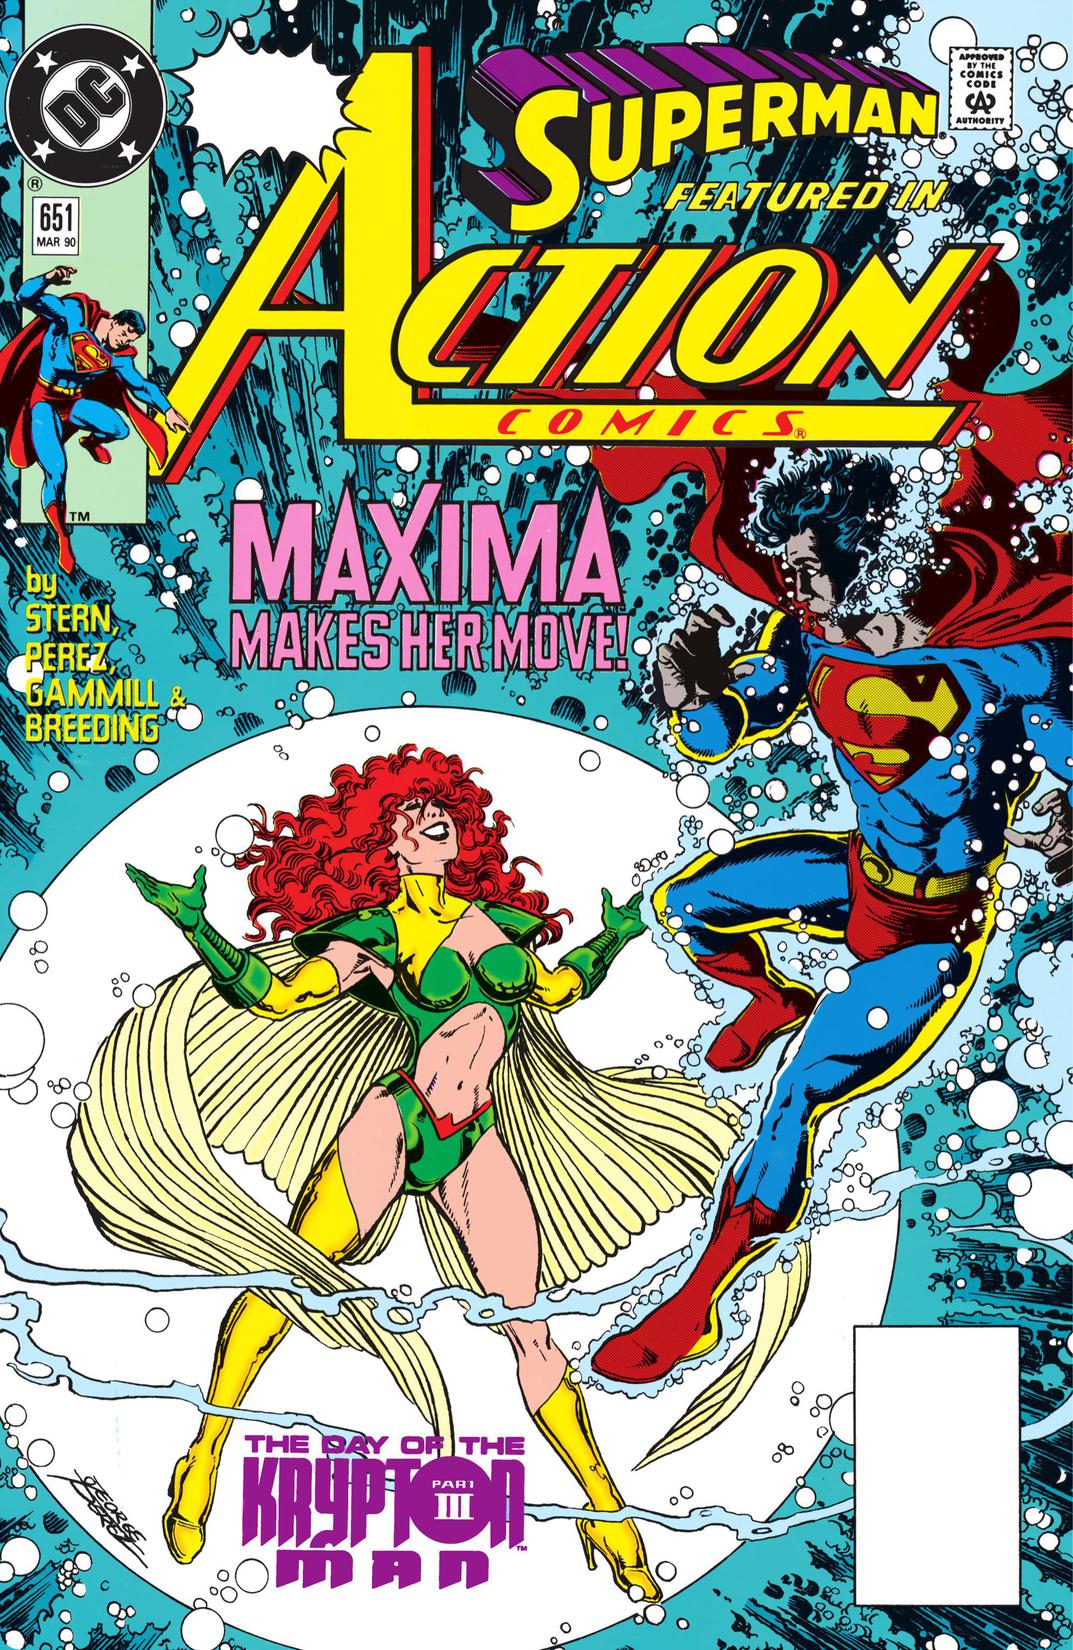 Action Comics (1938-2011) #651 preview images